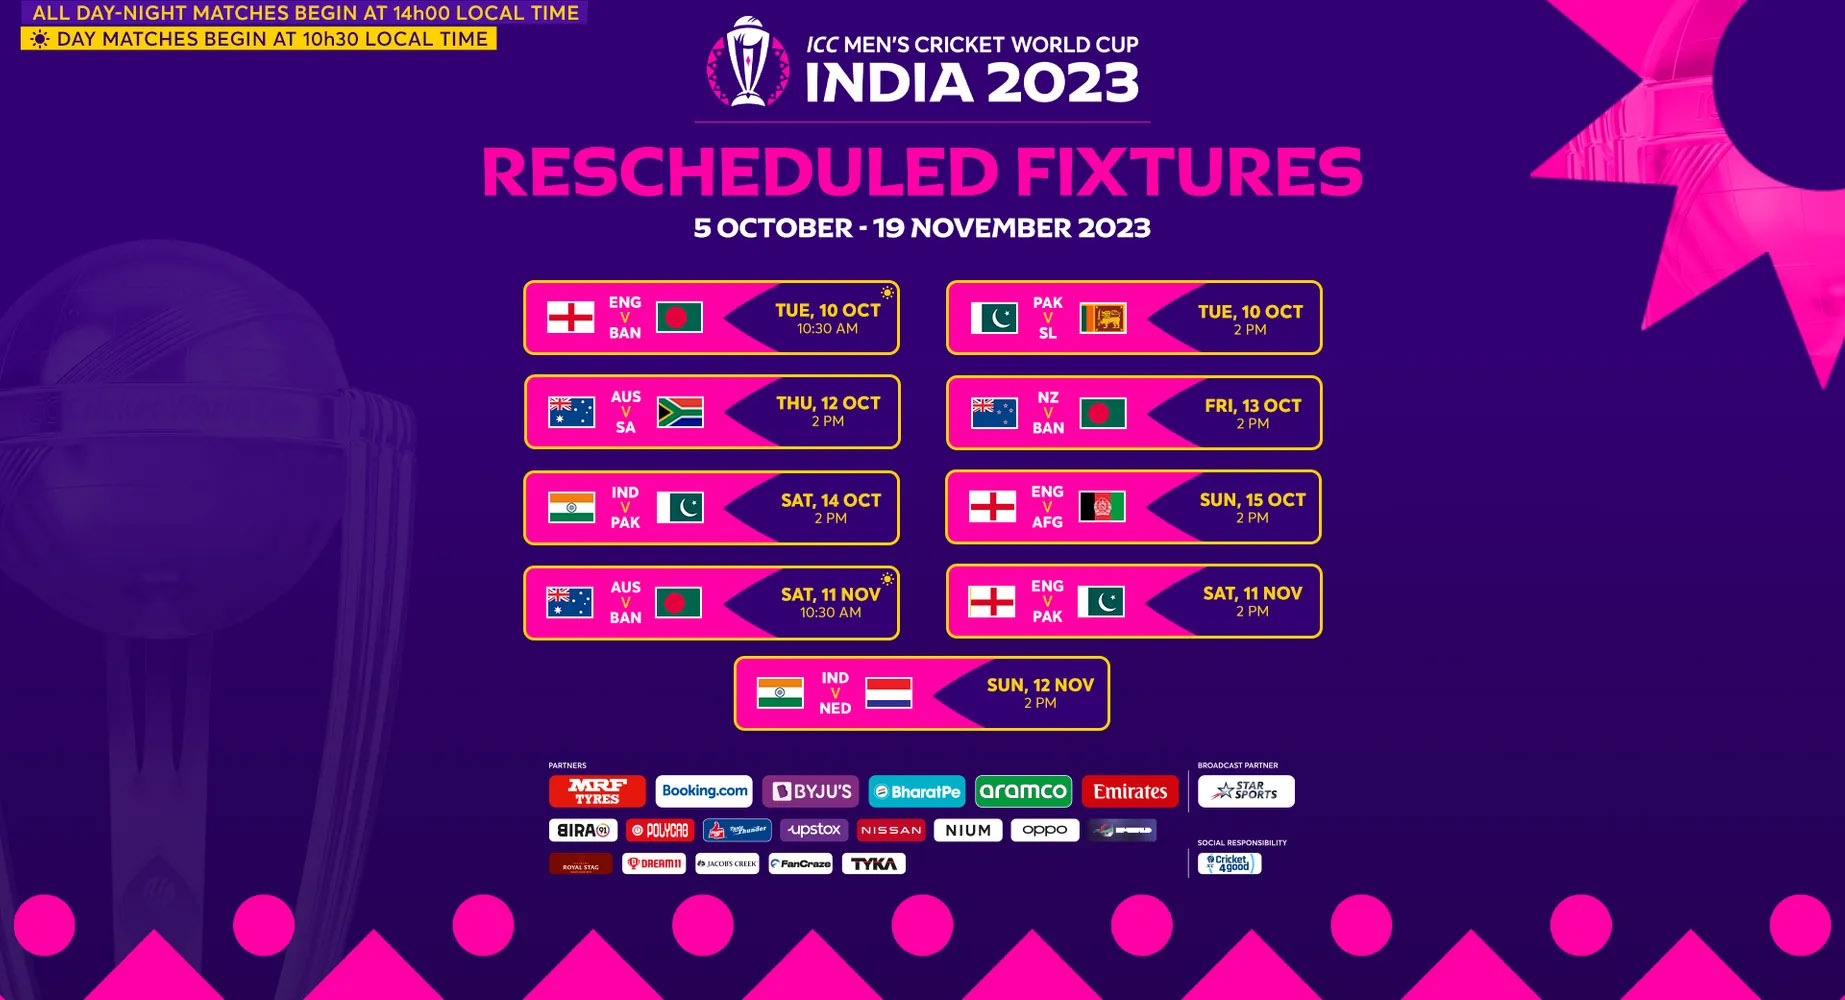 ICC Cricket World Cup 2023 - Match Schedule (Fixtures) (rescheduled)